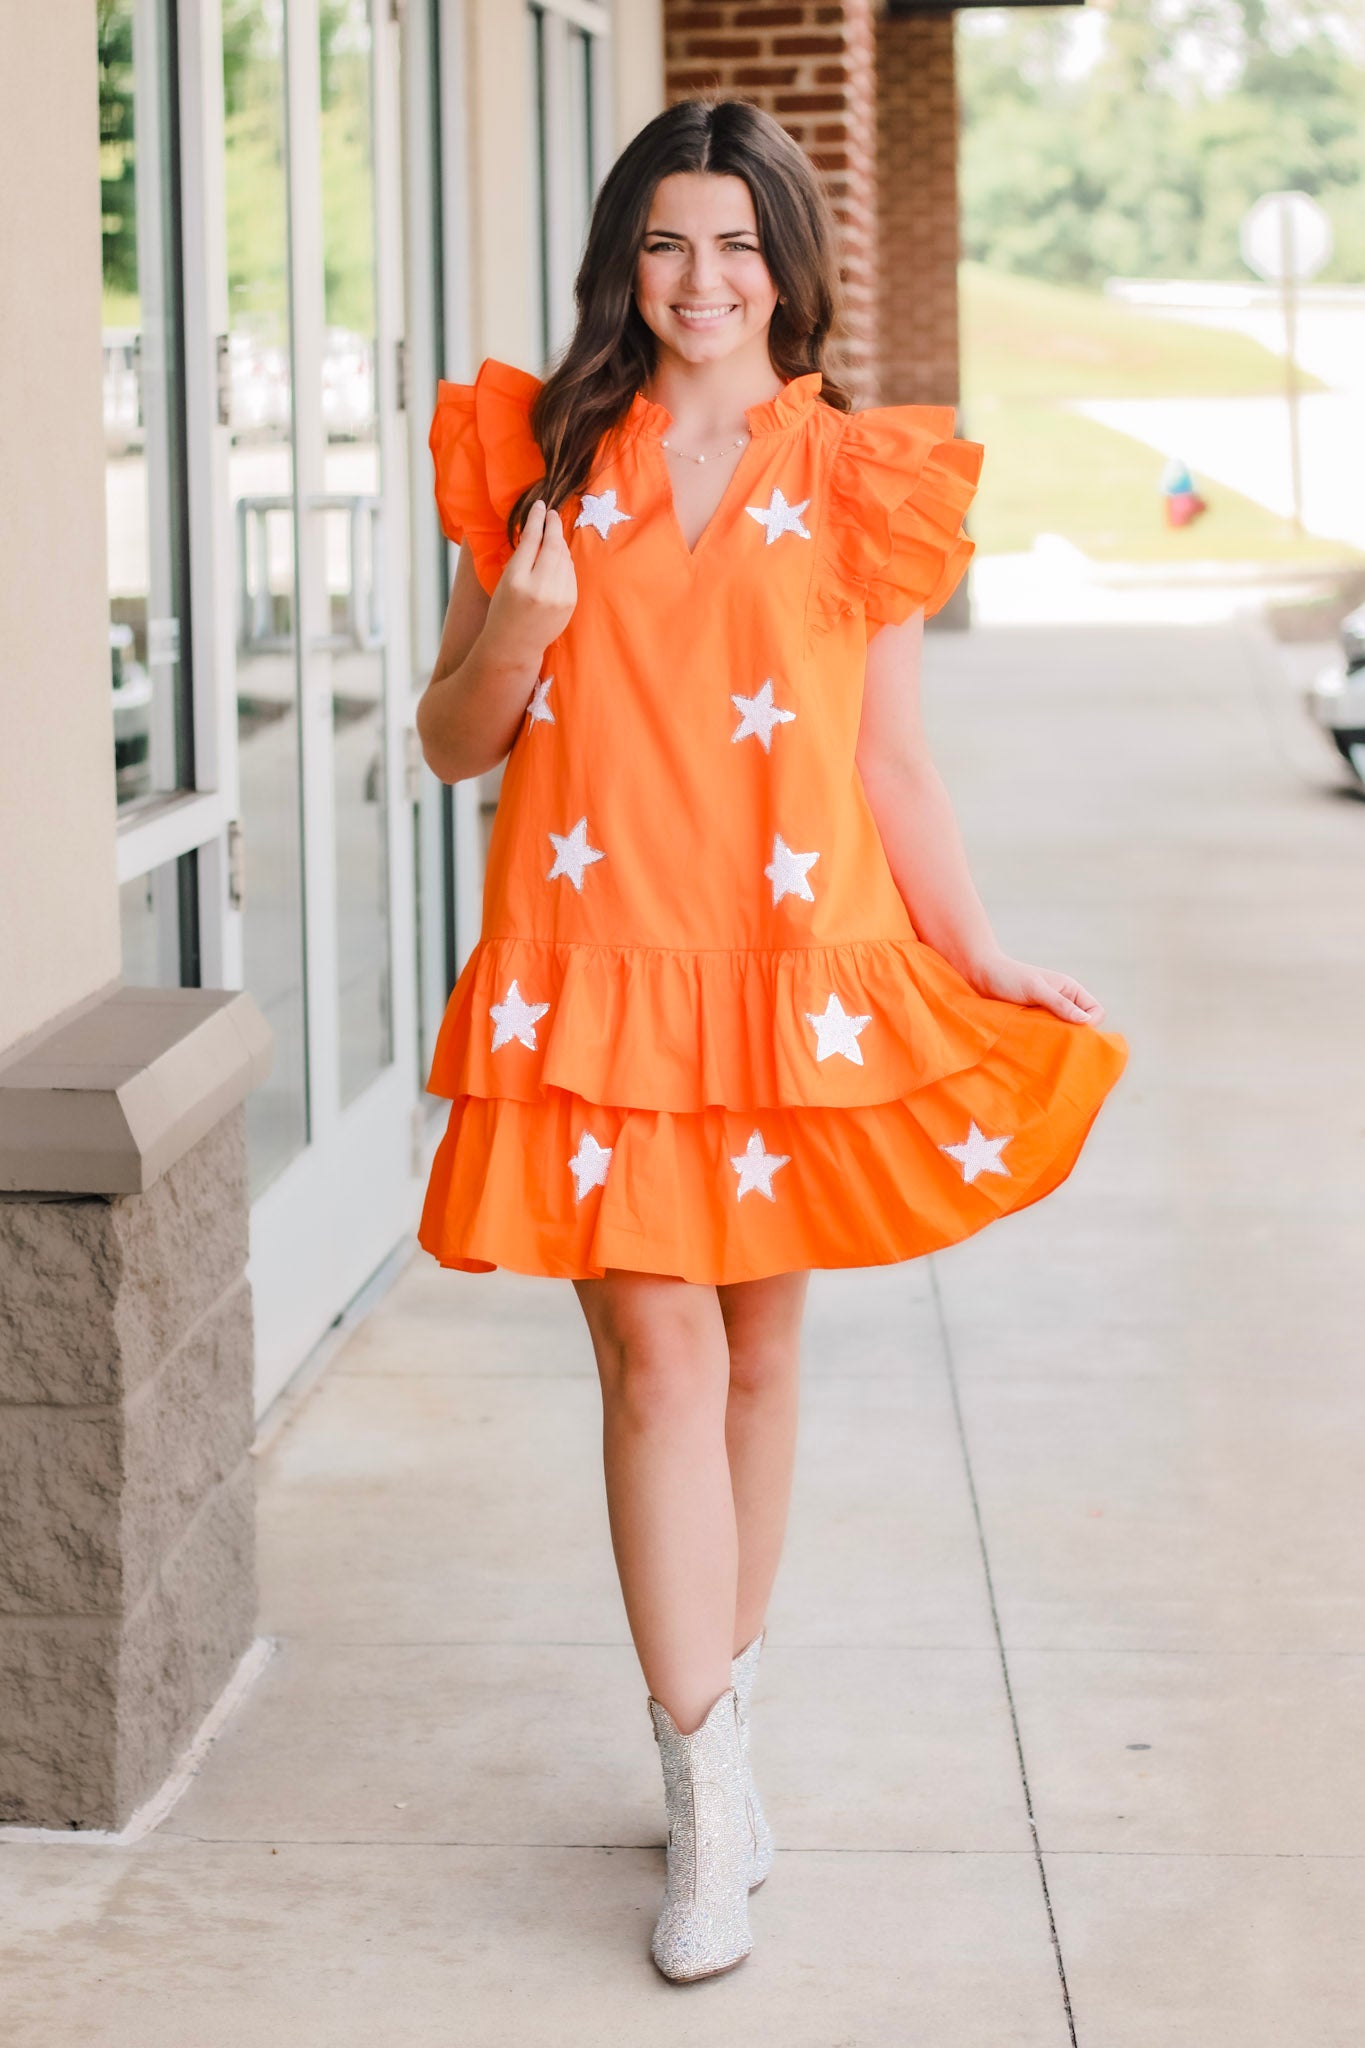 Go Big Orange Sequins Star Dress